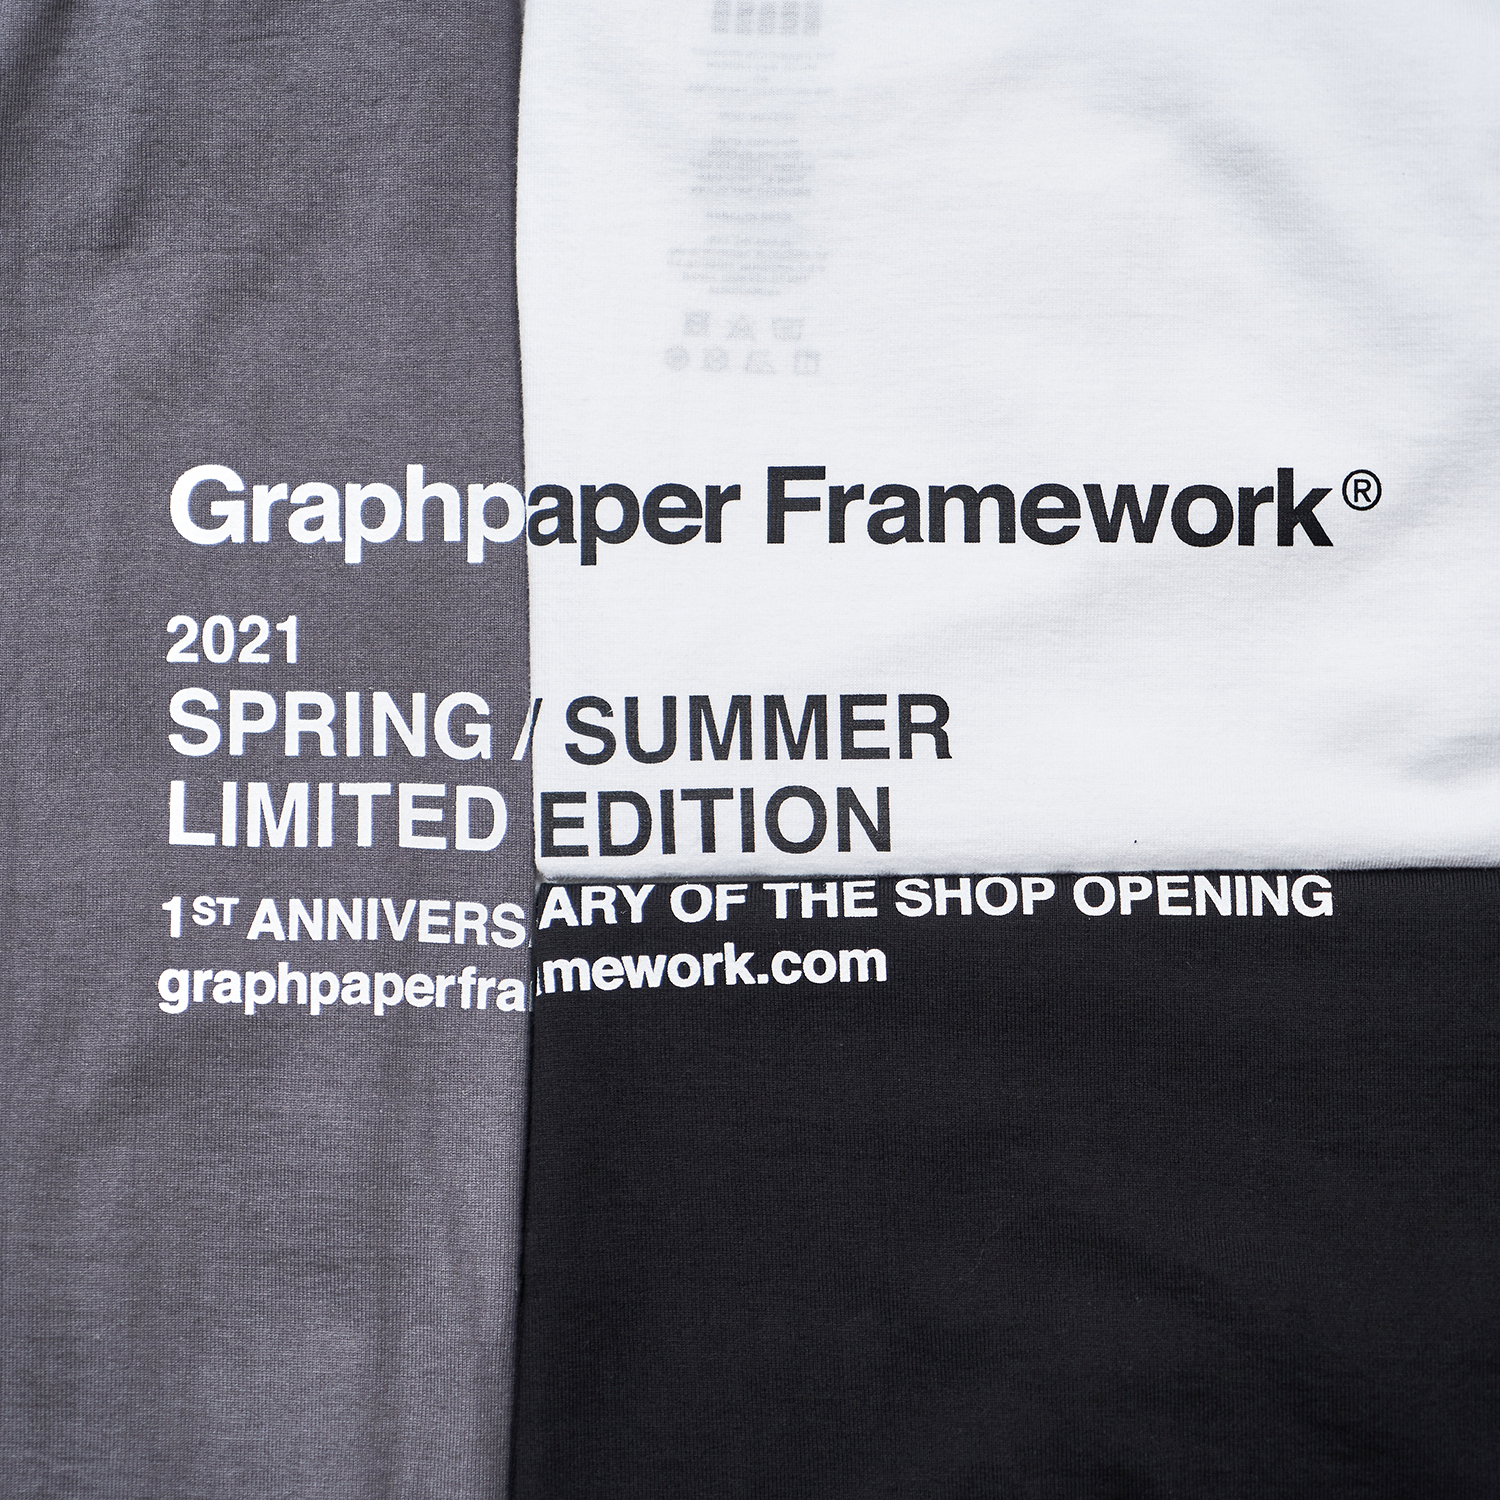 Graphpaper Frameworkの1周年を記念した限定Tシャツ